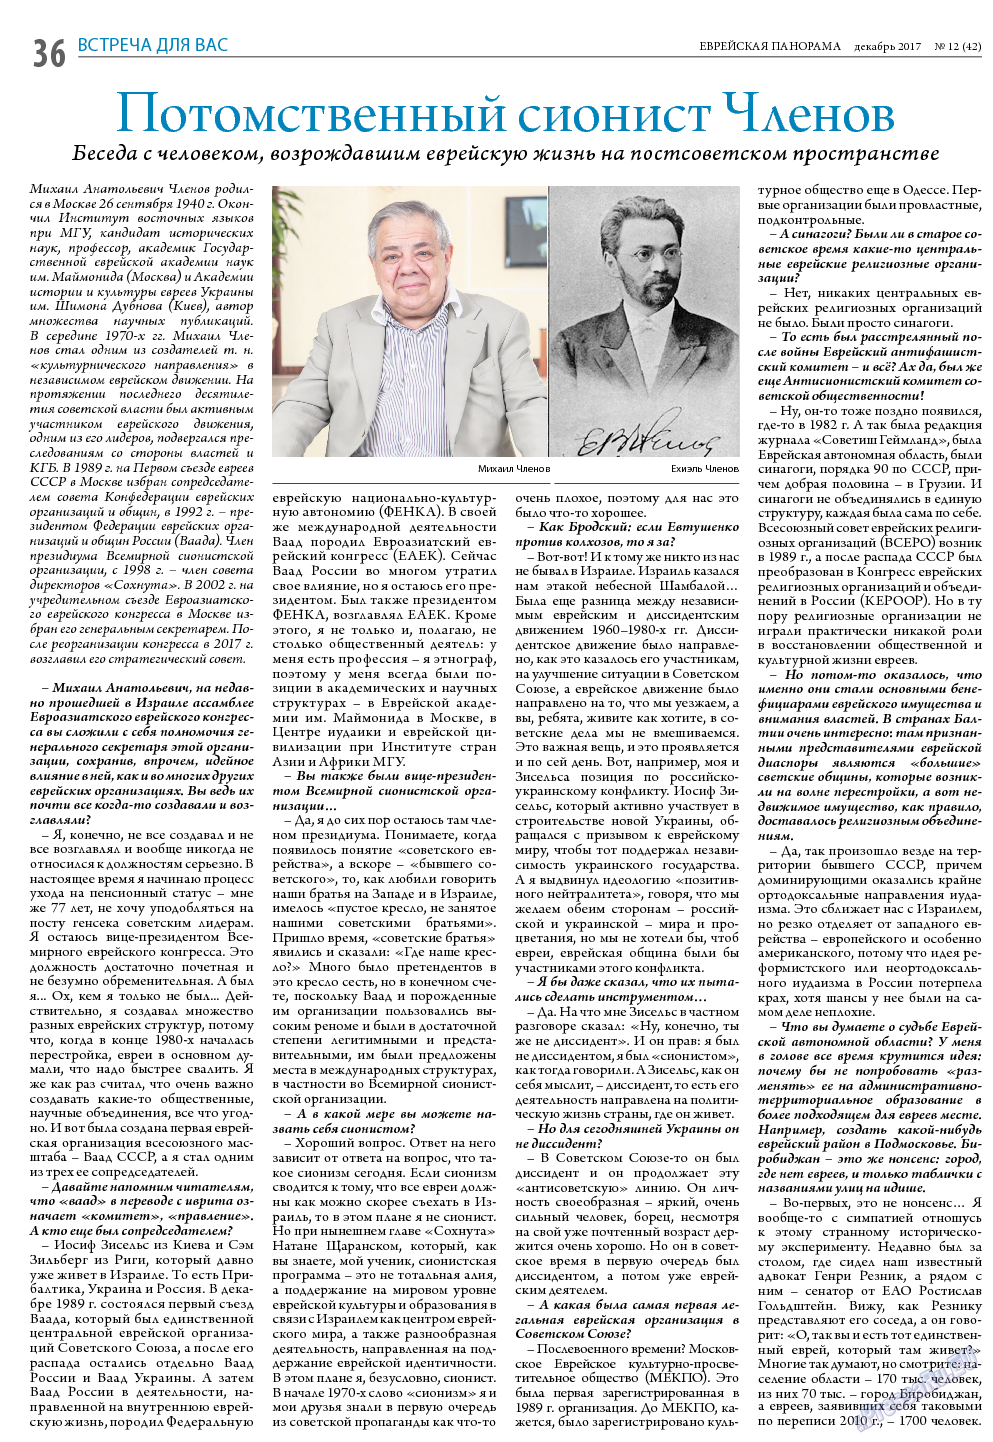 Еврейская панорама, газета. 2017 №12 стр.36